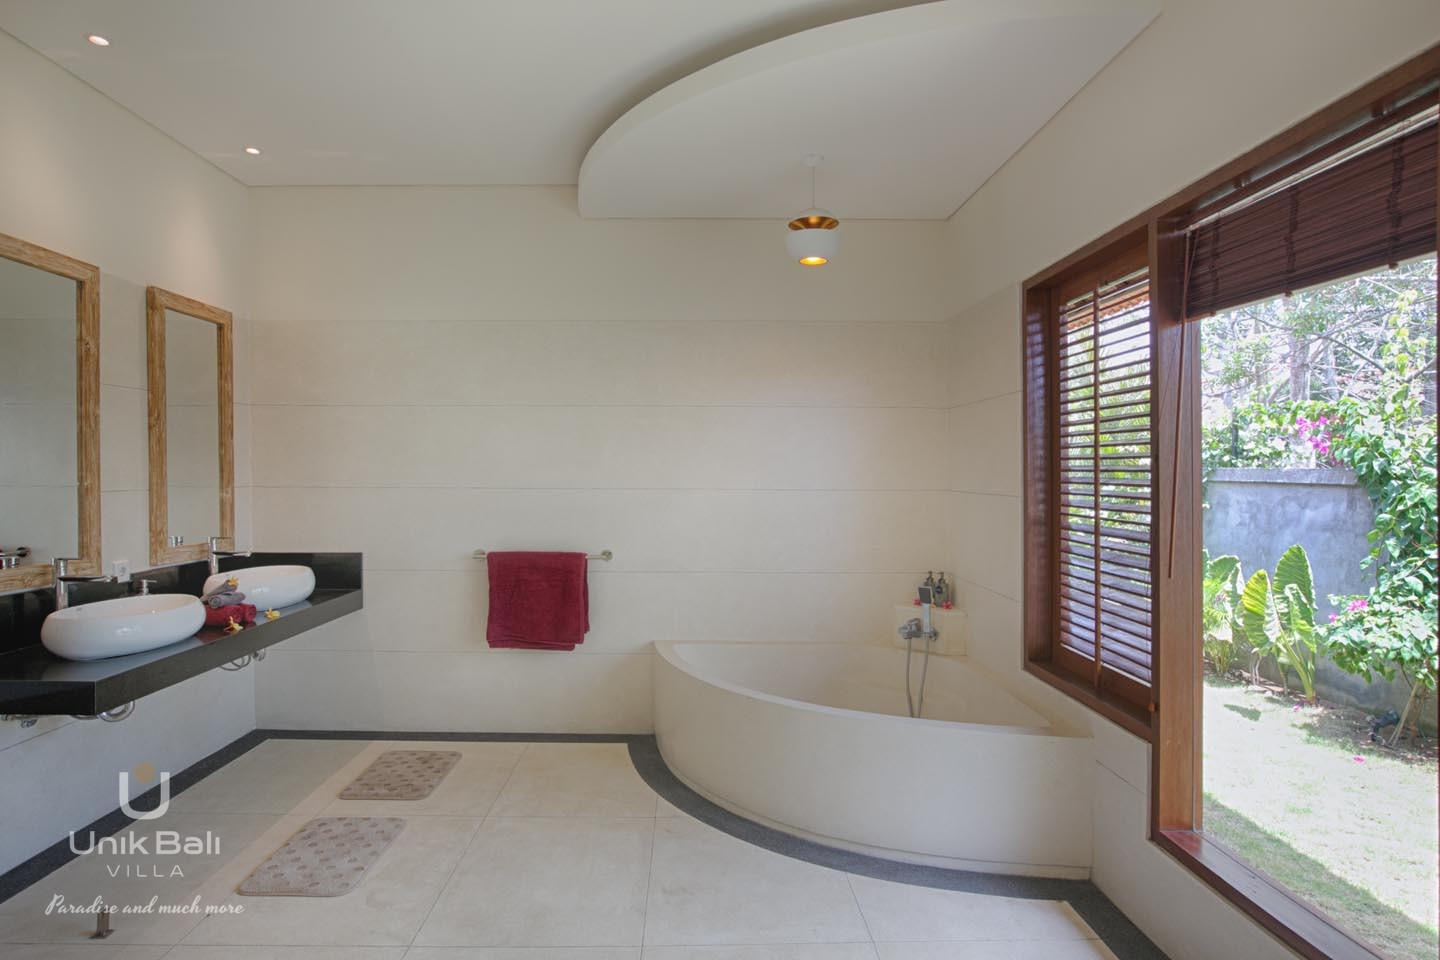 unik-bali-villa-marsun-for-rent-large-bathroom-with-bathtub